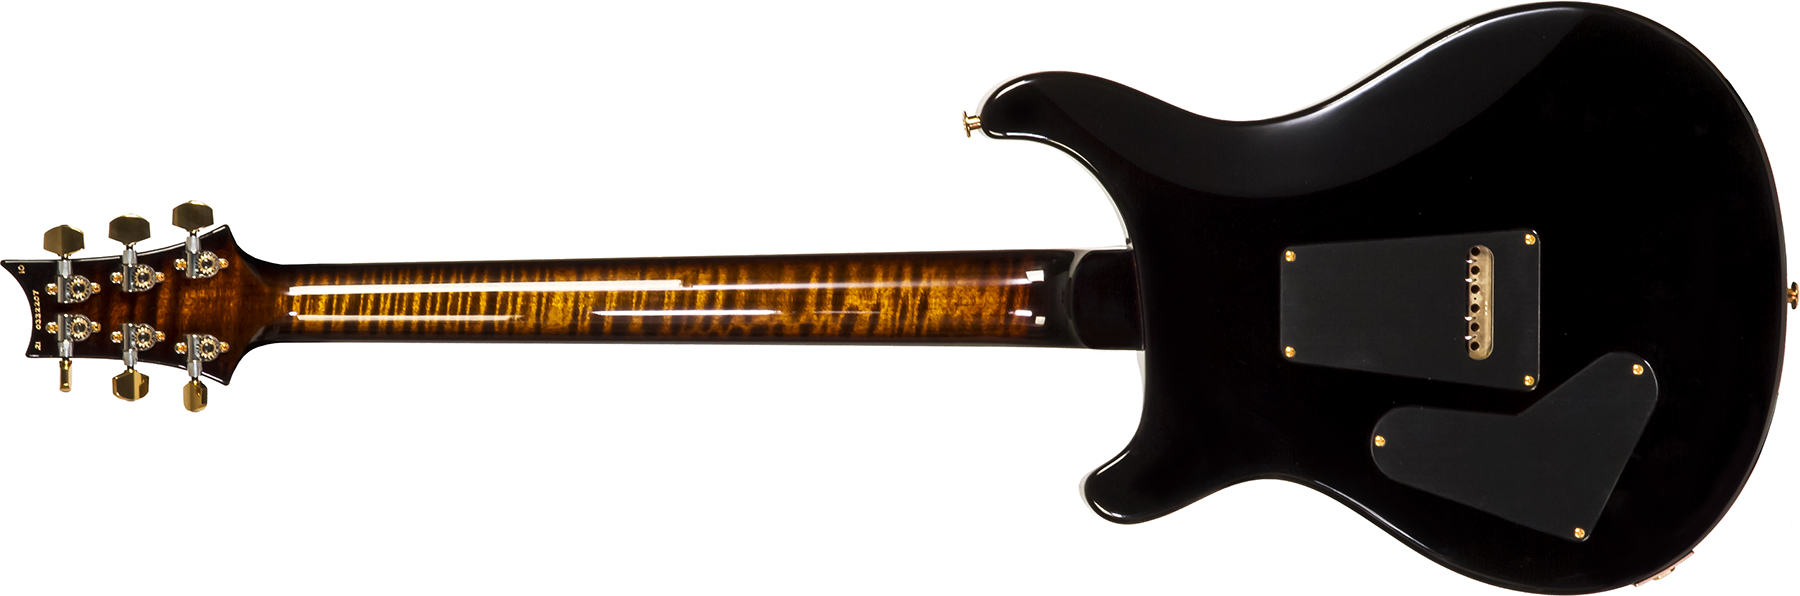 Prs Custom 24 10 Top Usa 2h Trem Rw #21-0332207 - Black Gold Burst - Guitarra eléctrica de doble corte. - Variation 1